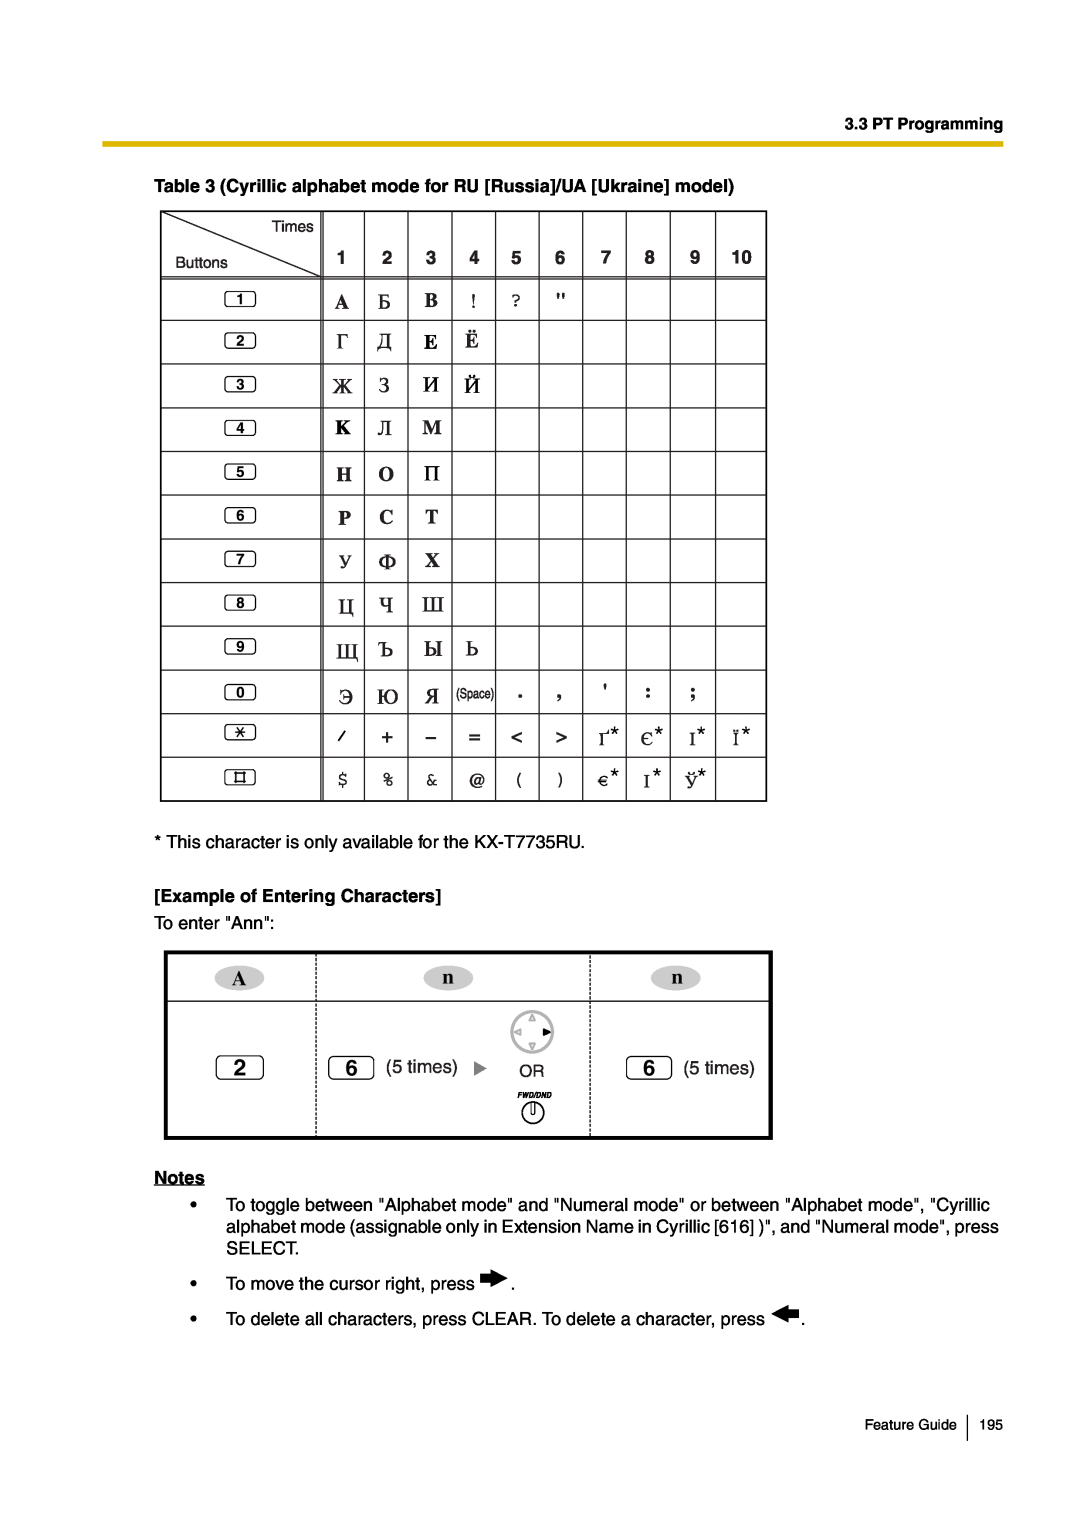 Panasonic kx-tea308 manual 6 5 times, Example of Entering Characters, Notes 